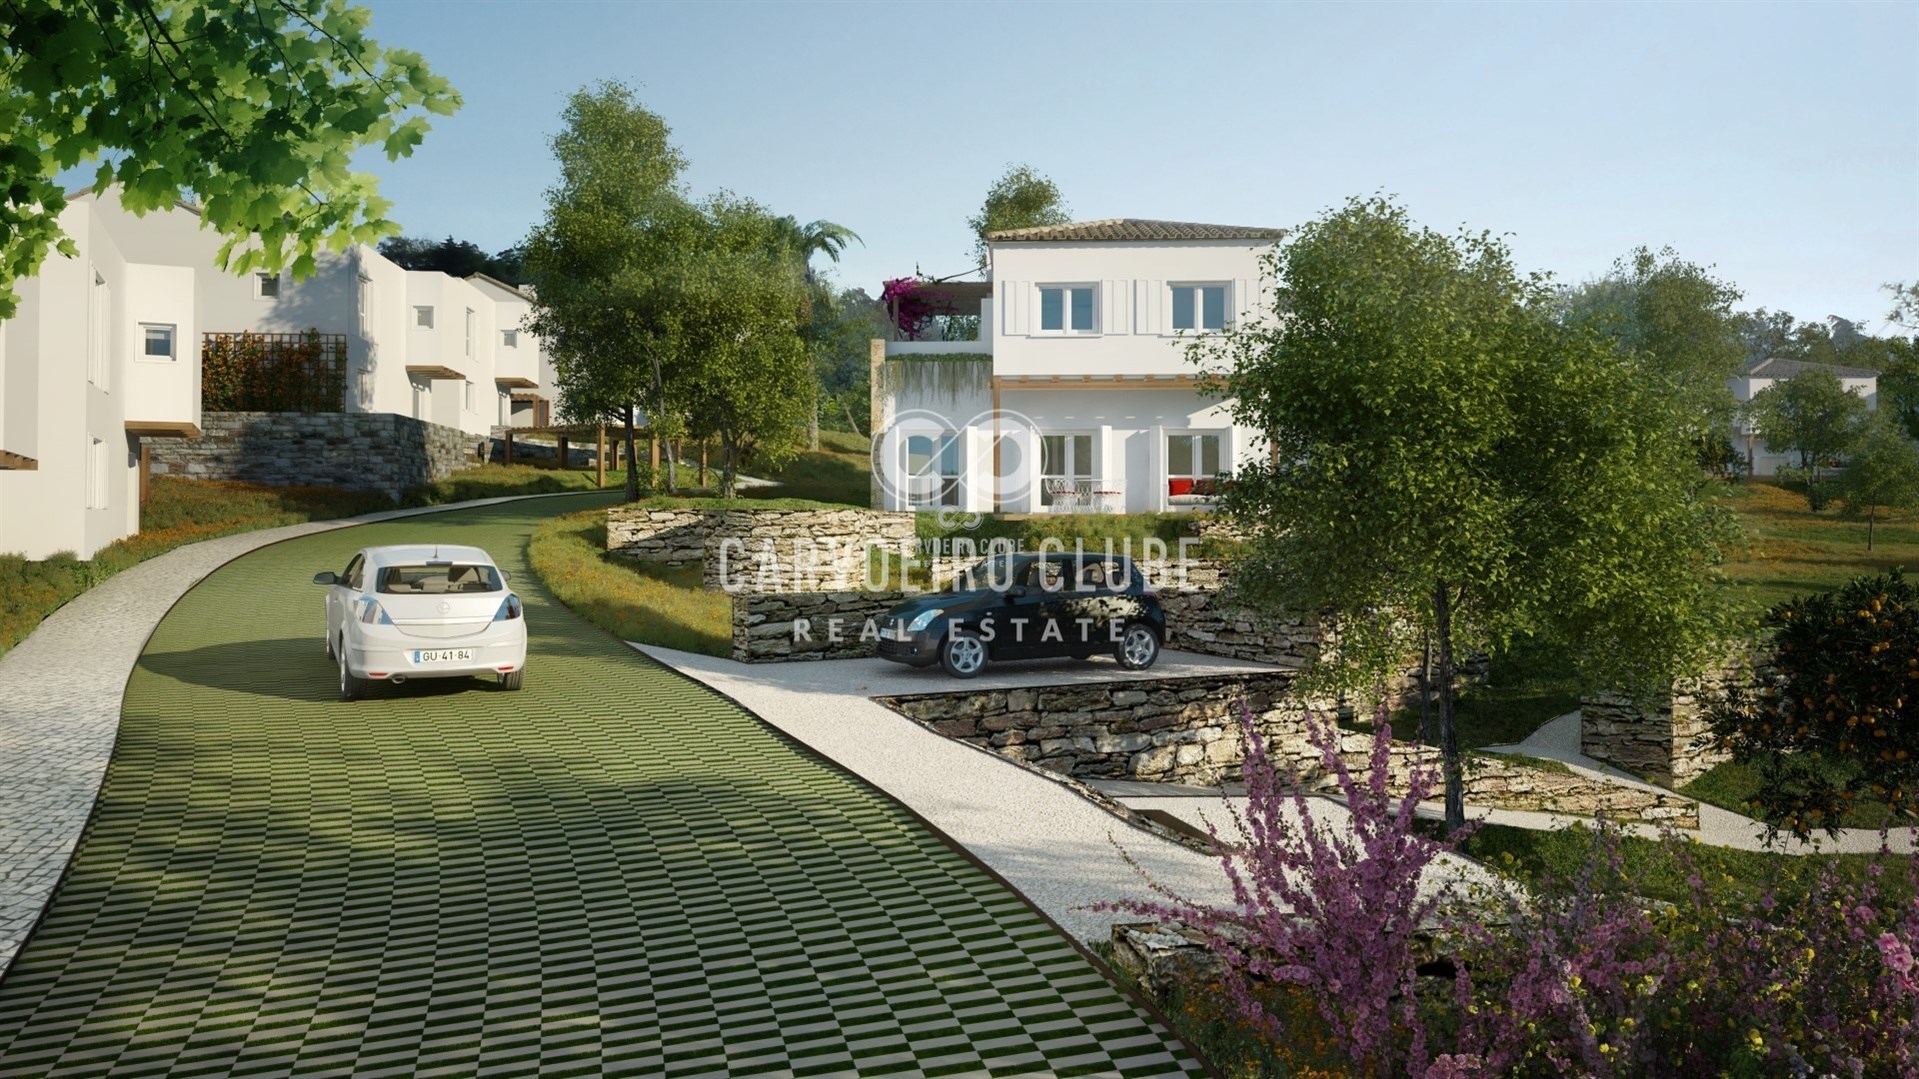 New 3-bedroom villas in a gated garden community 